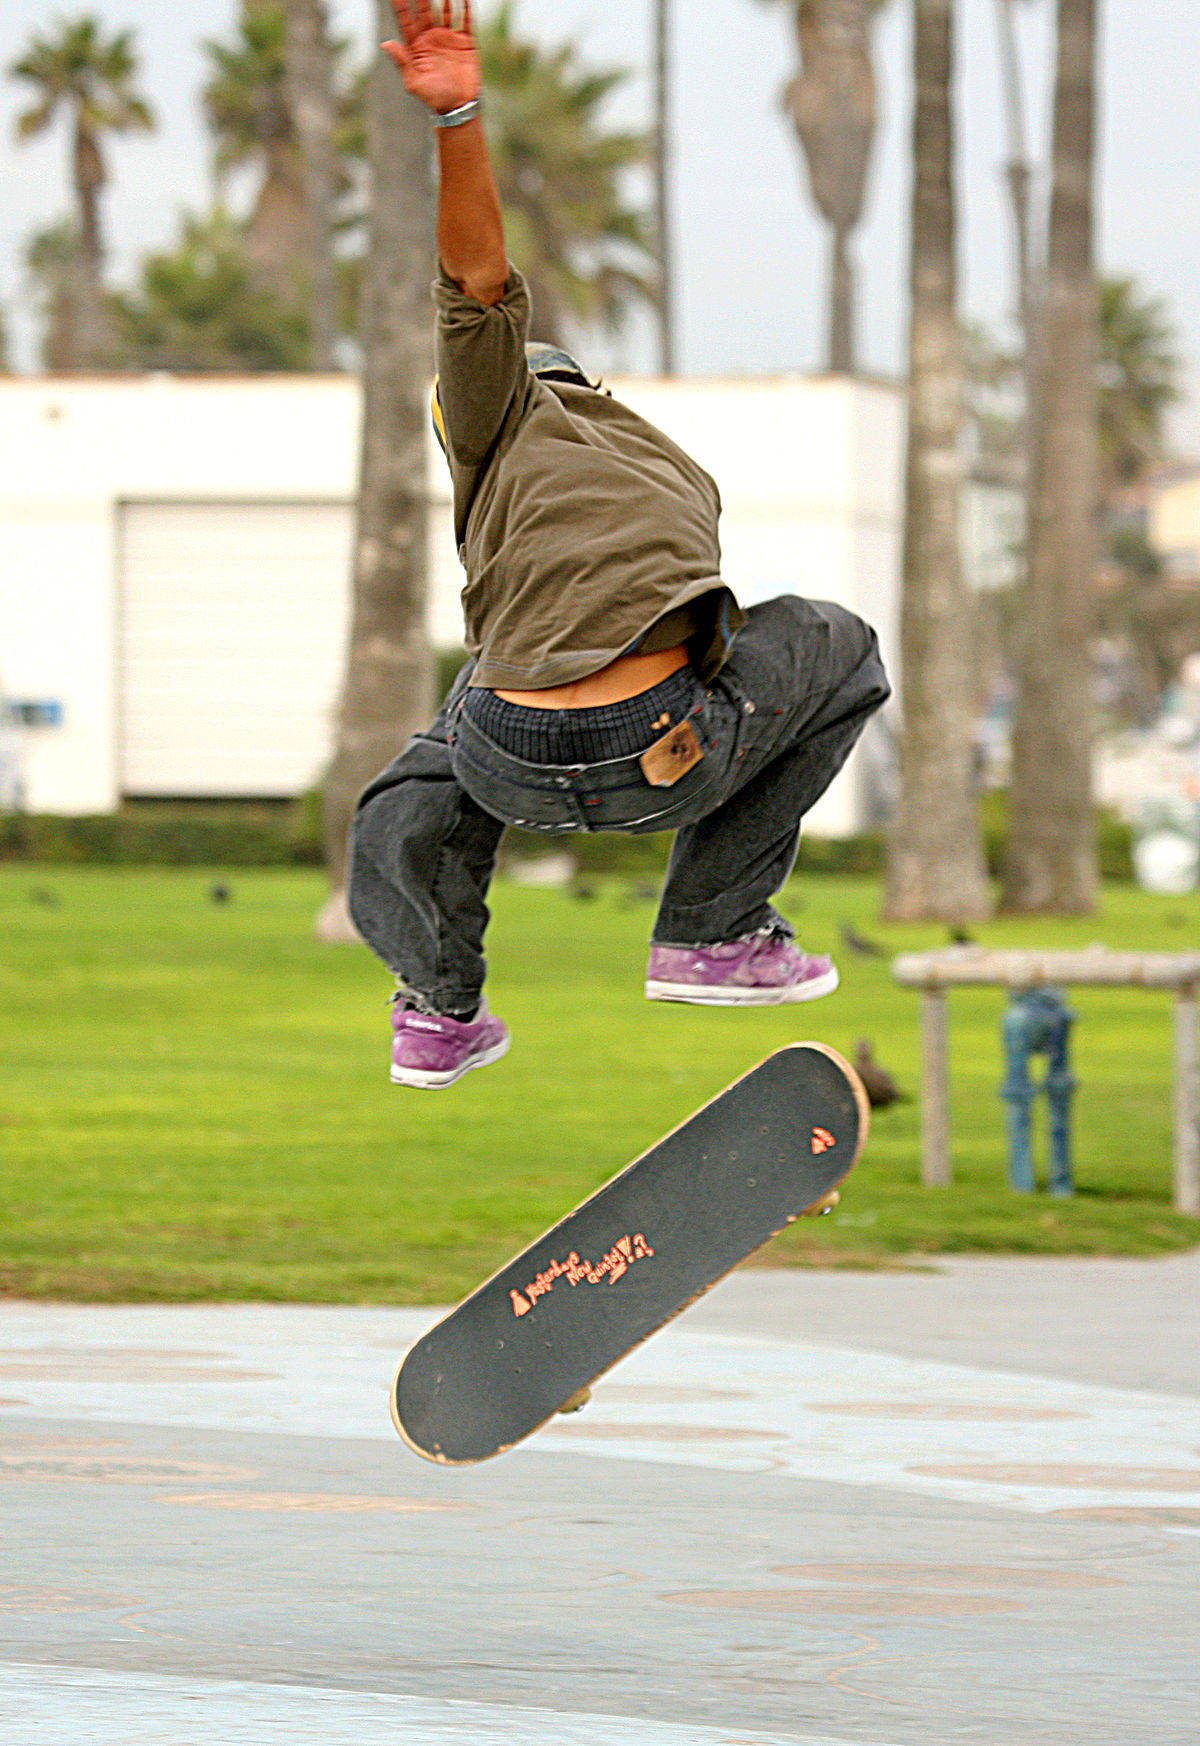 Bs Bigspin Skateboarding Wallpaper